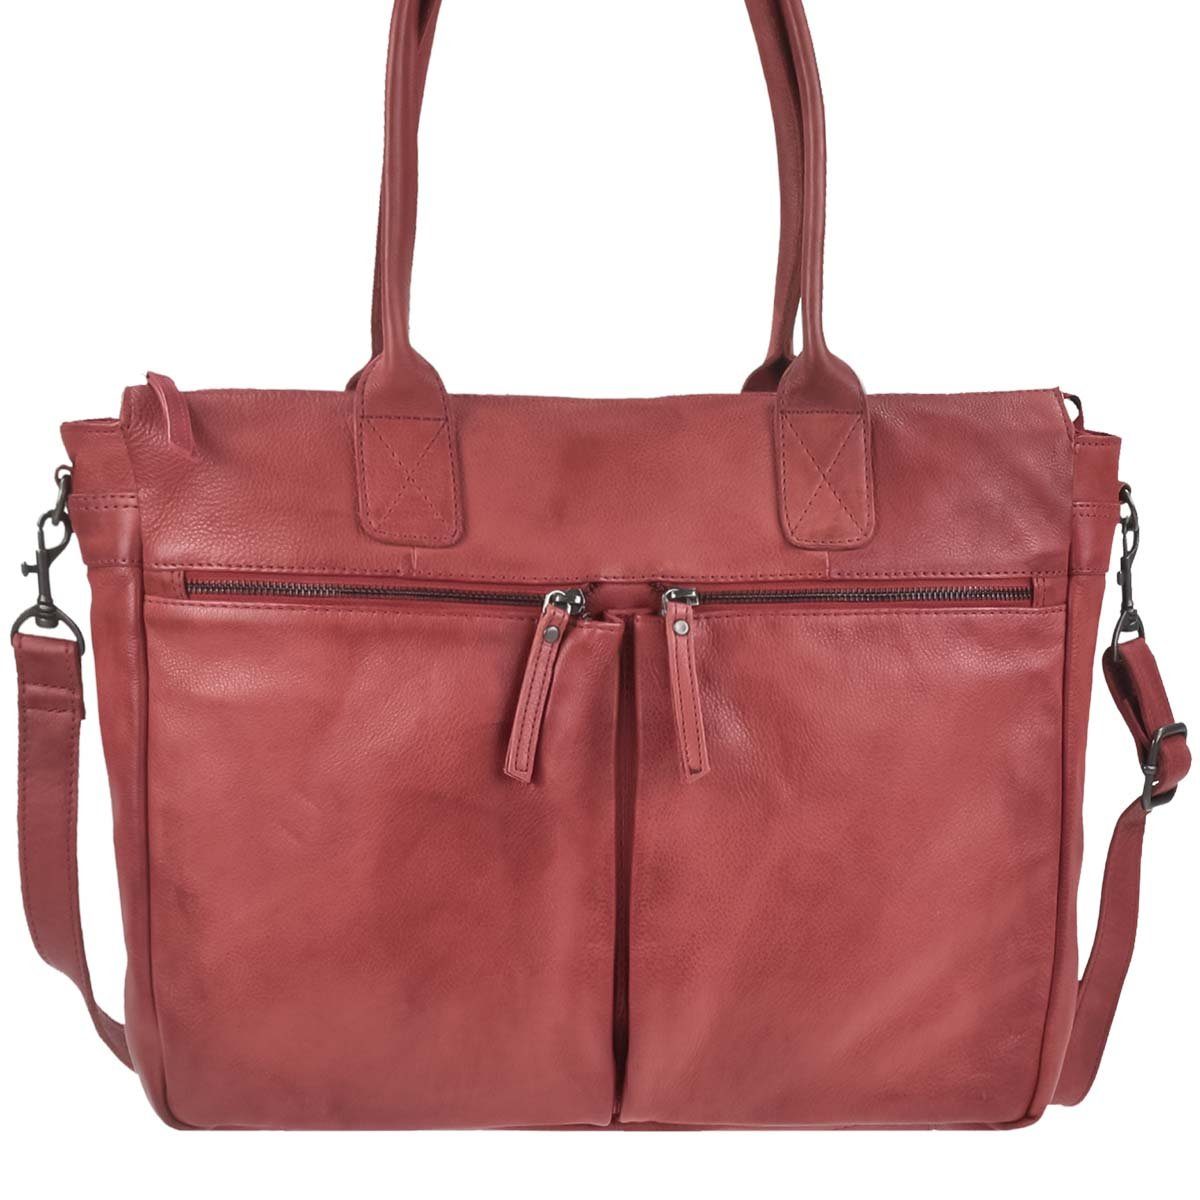 Bear Design Shopper "Binni" Callisto Pelle Leder, große Handtasche, Schultertasche 45x32cm, weich, knautschig rot